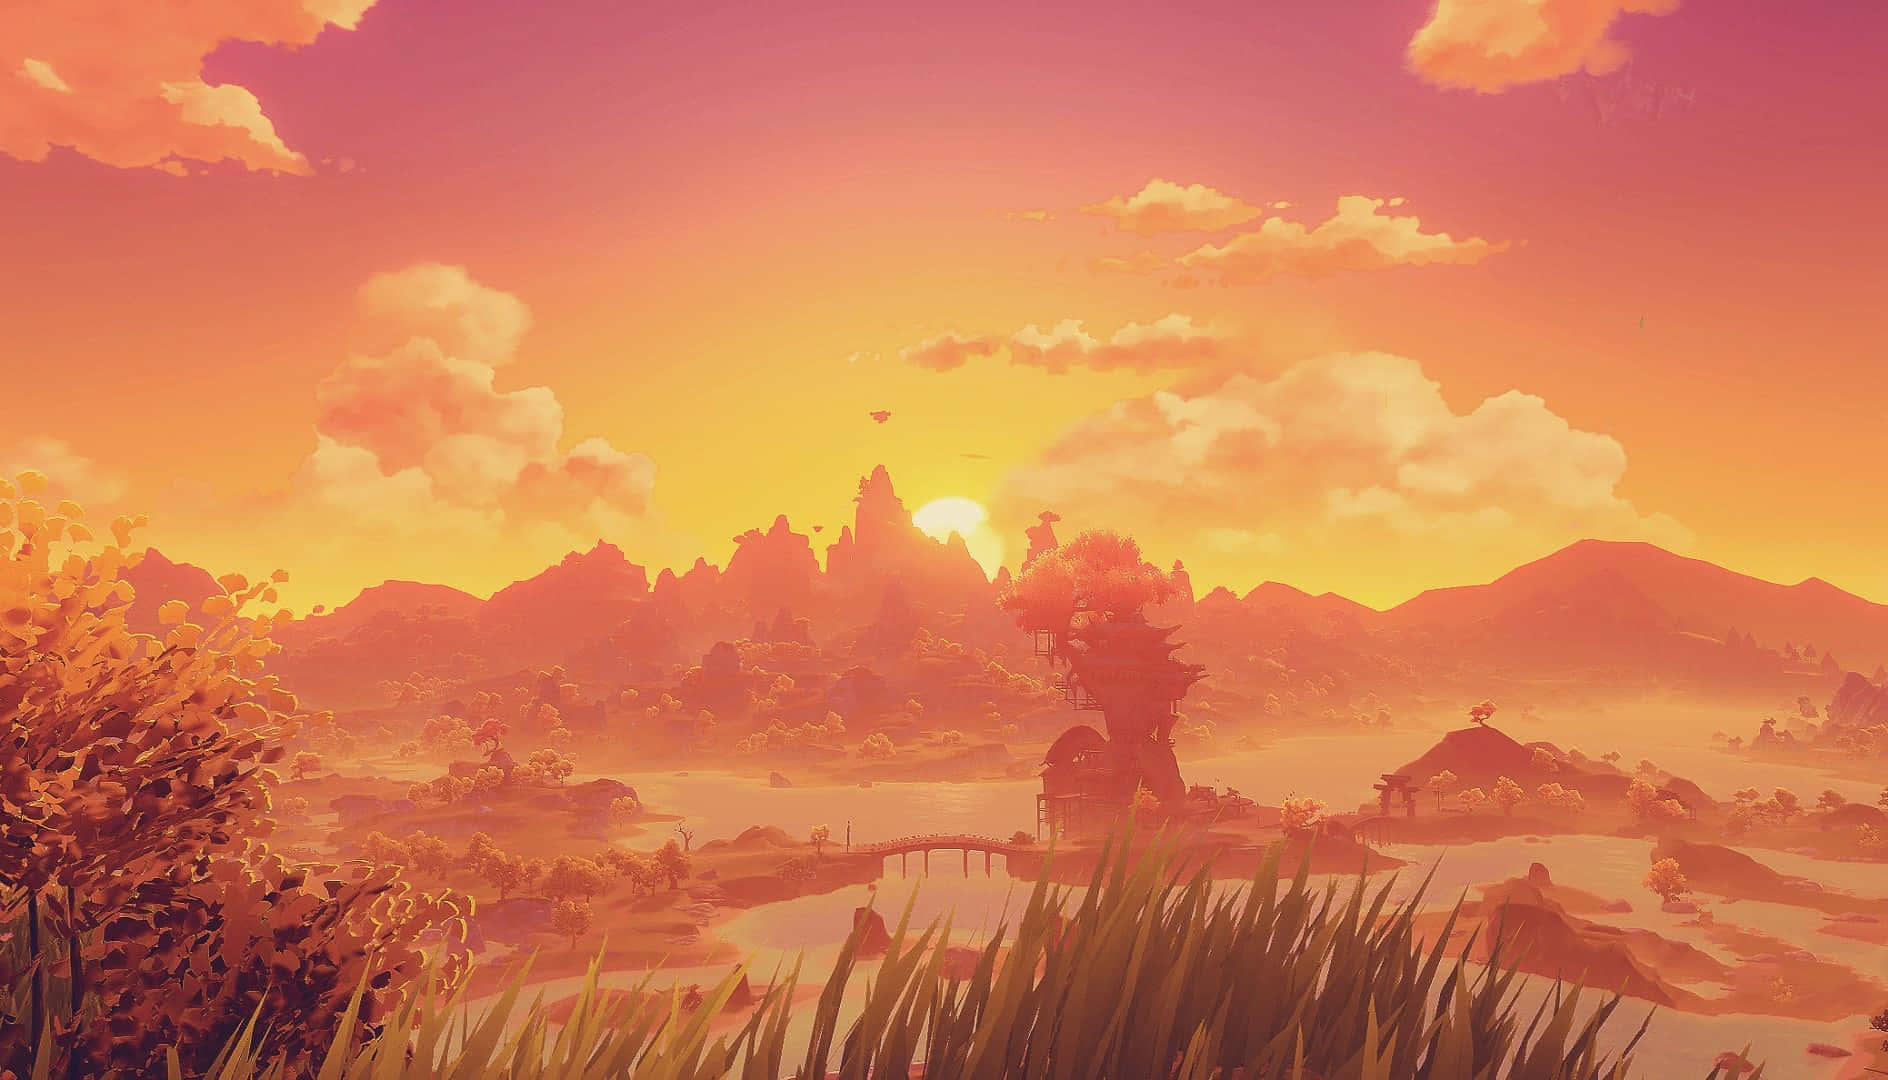 Genshin_ Impact_ Liyue_ Sunset_ Scenery Wallpaper